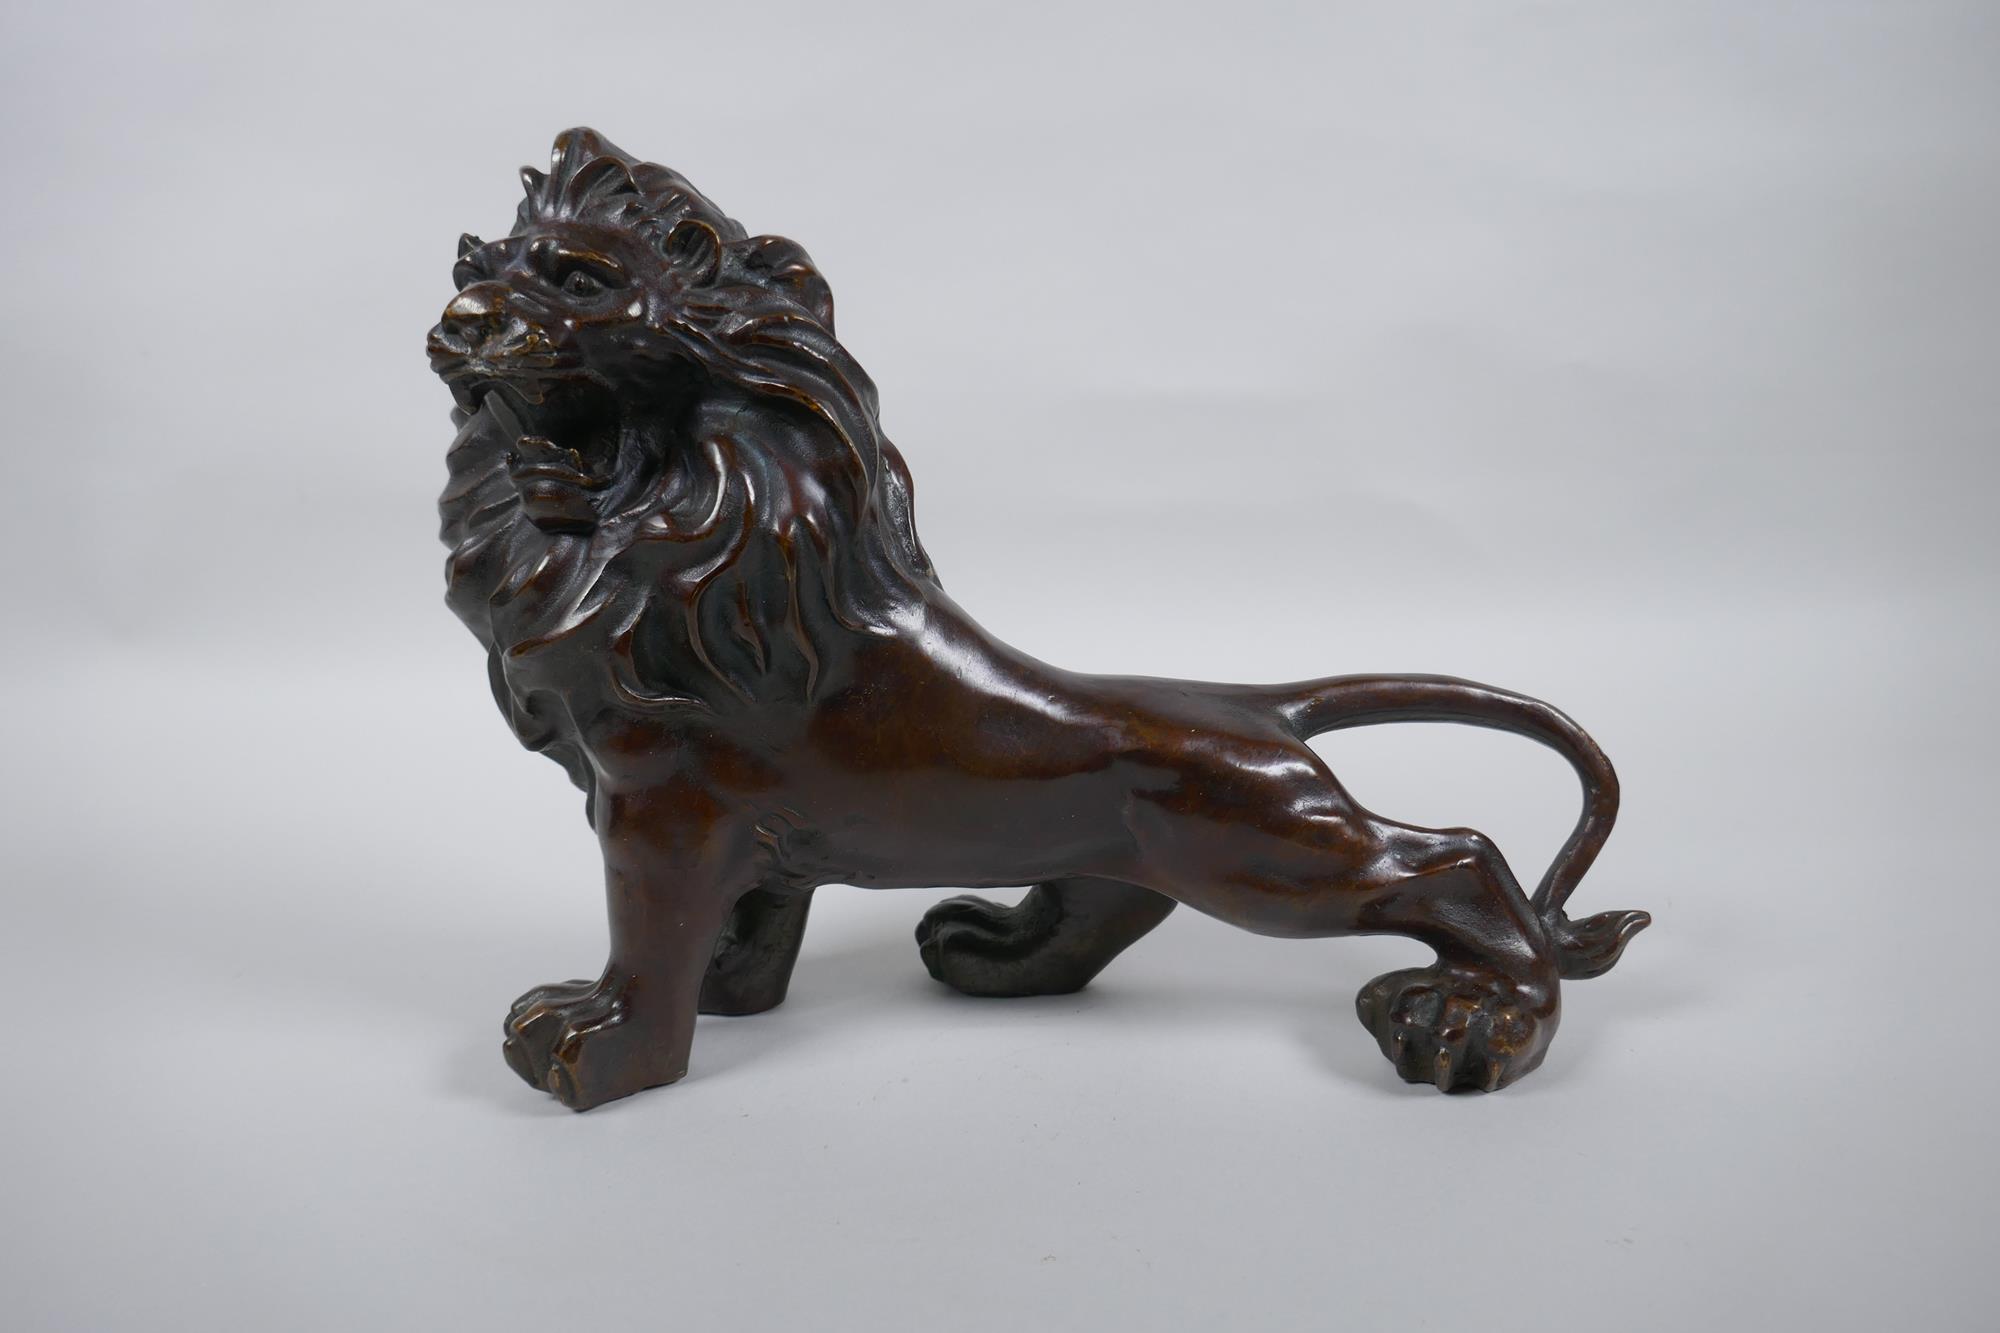 A filled bronze figure of a lion, 26cm long